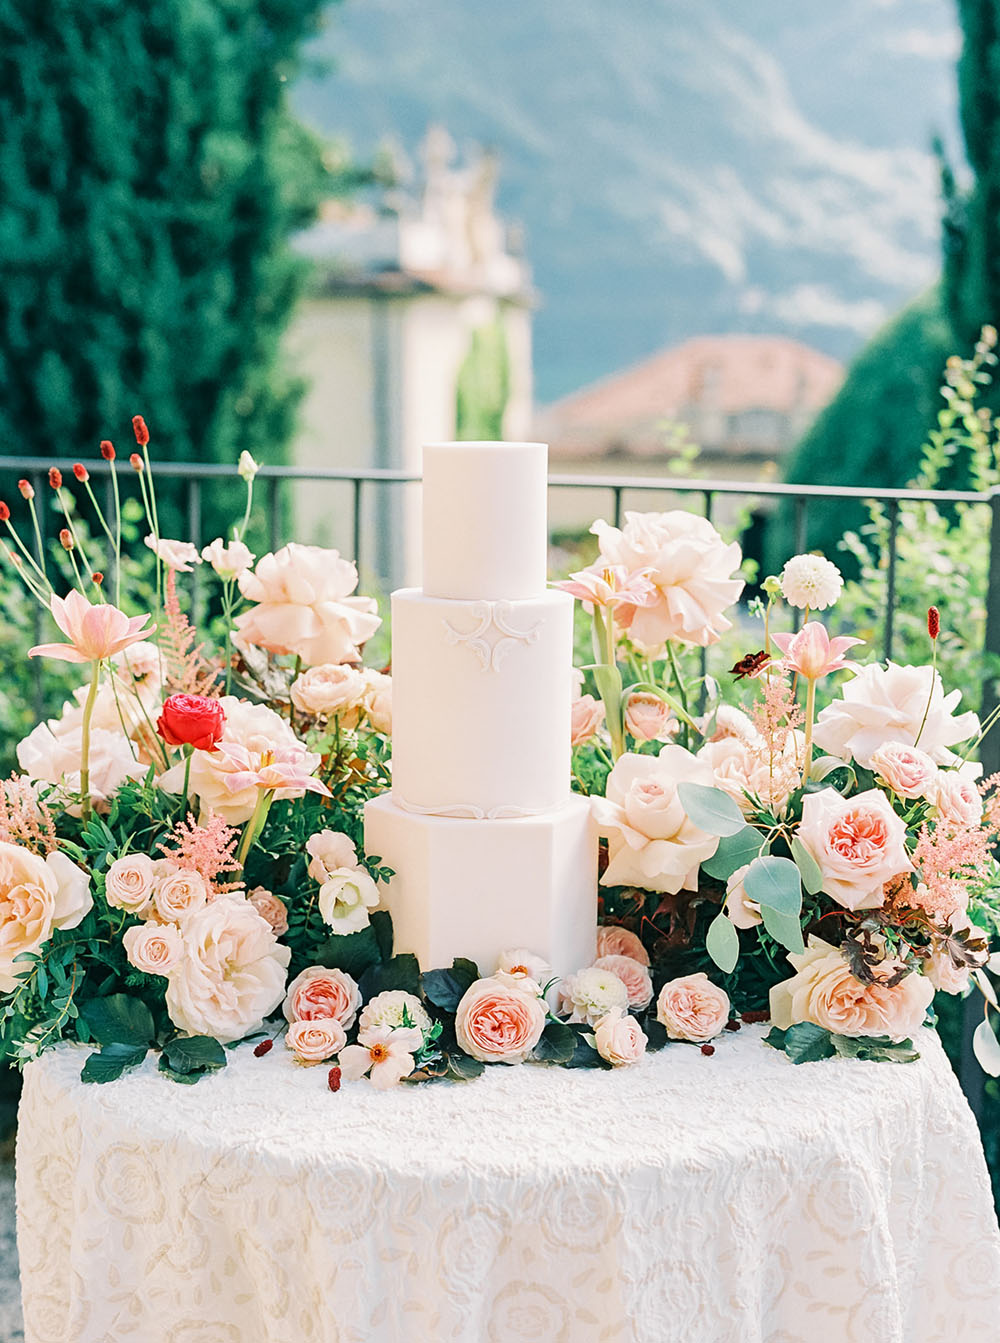 romantic wedding cake surrounded by lush spring wedding flowers